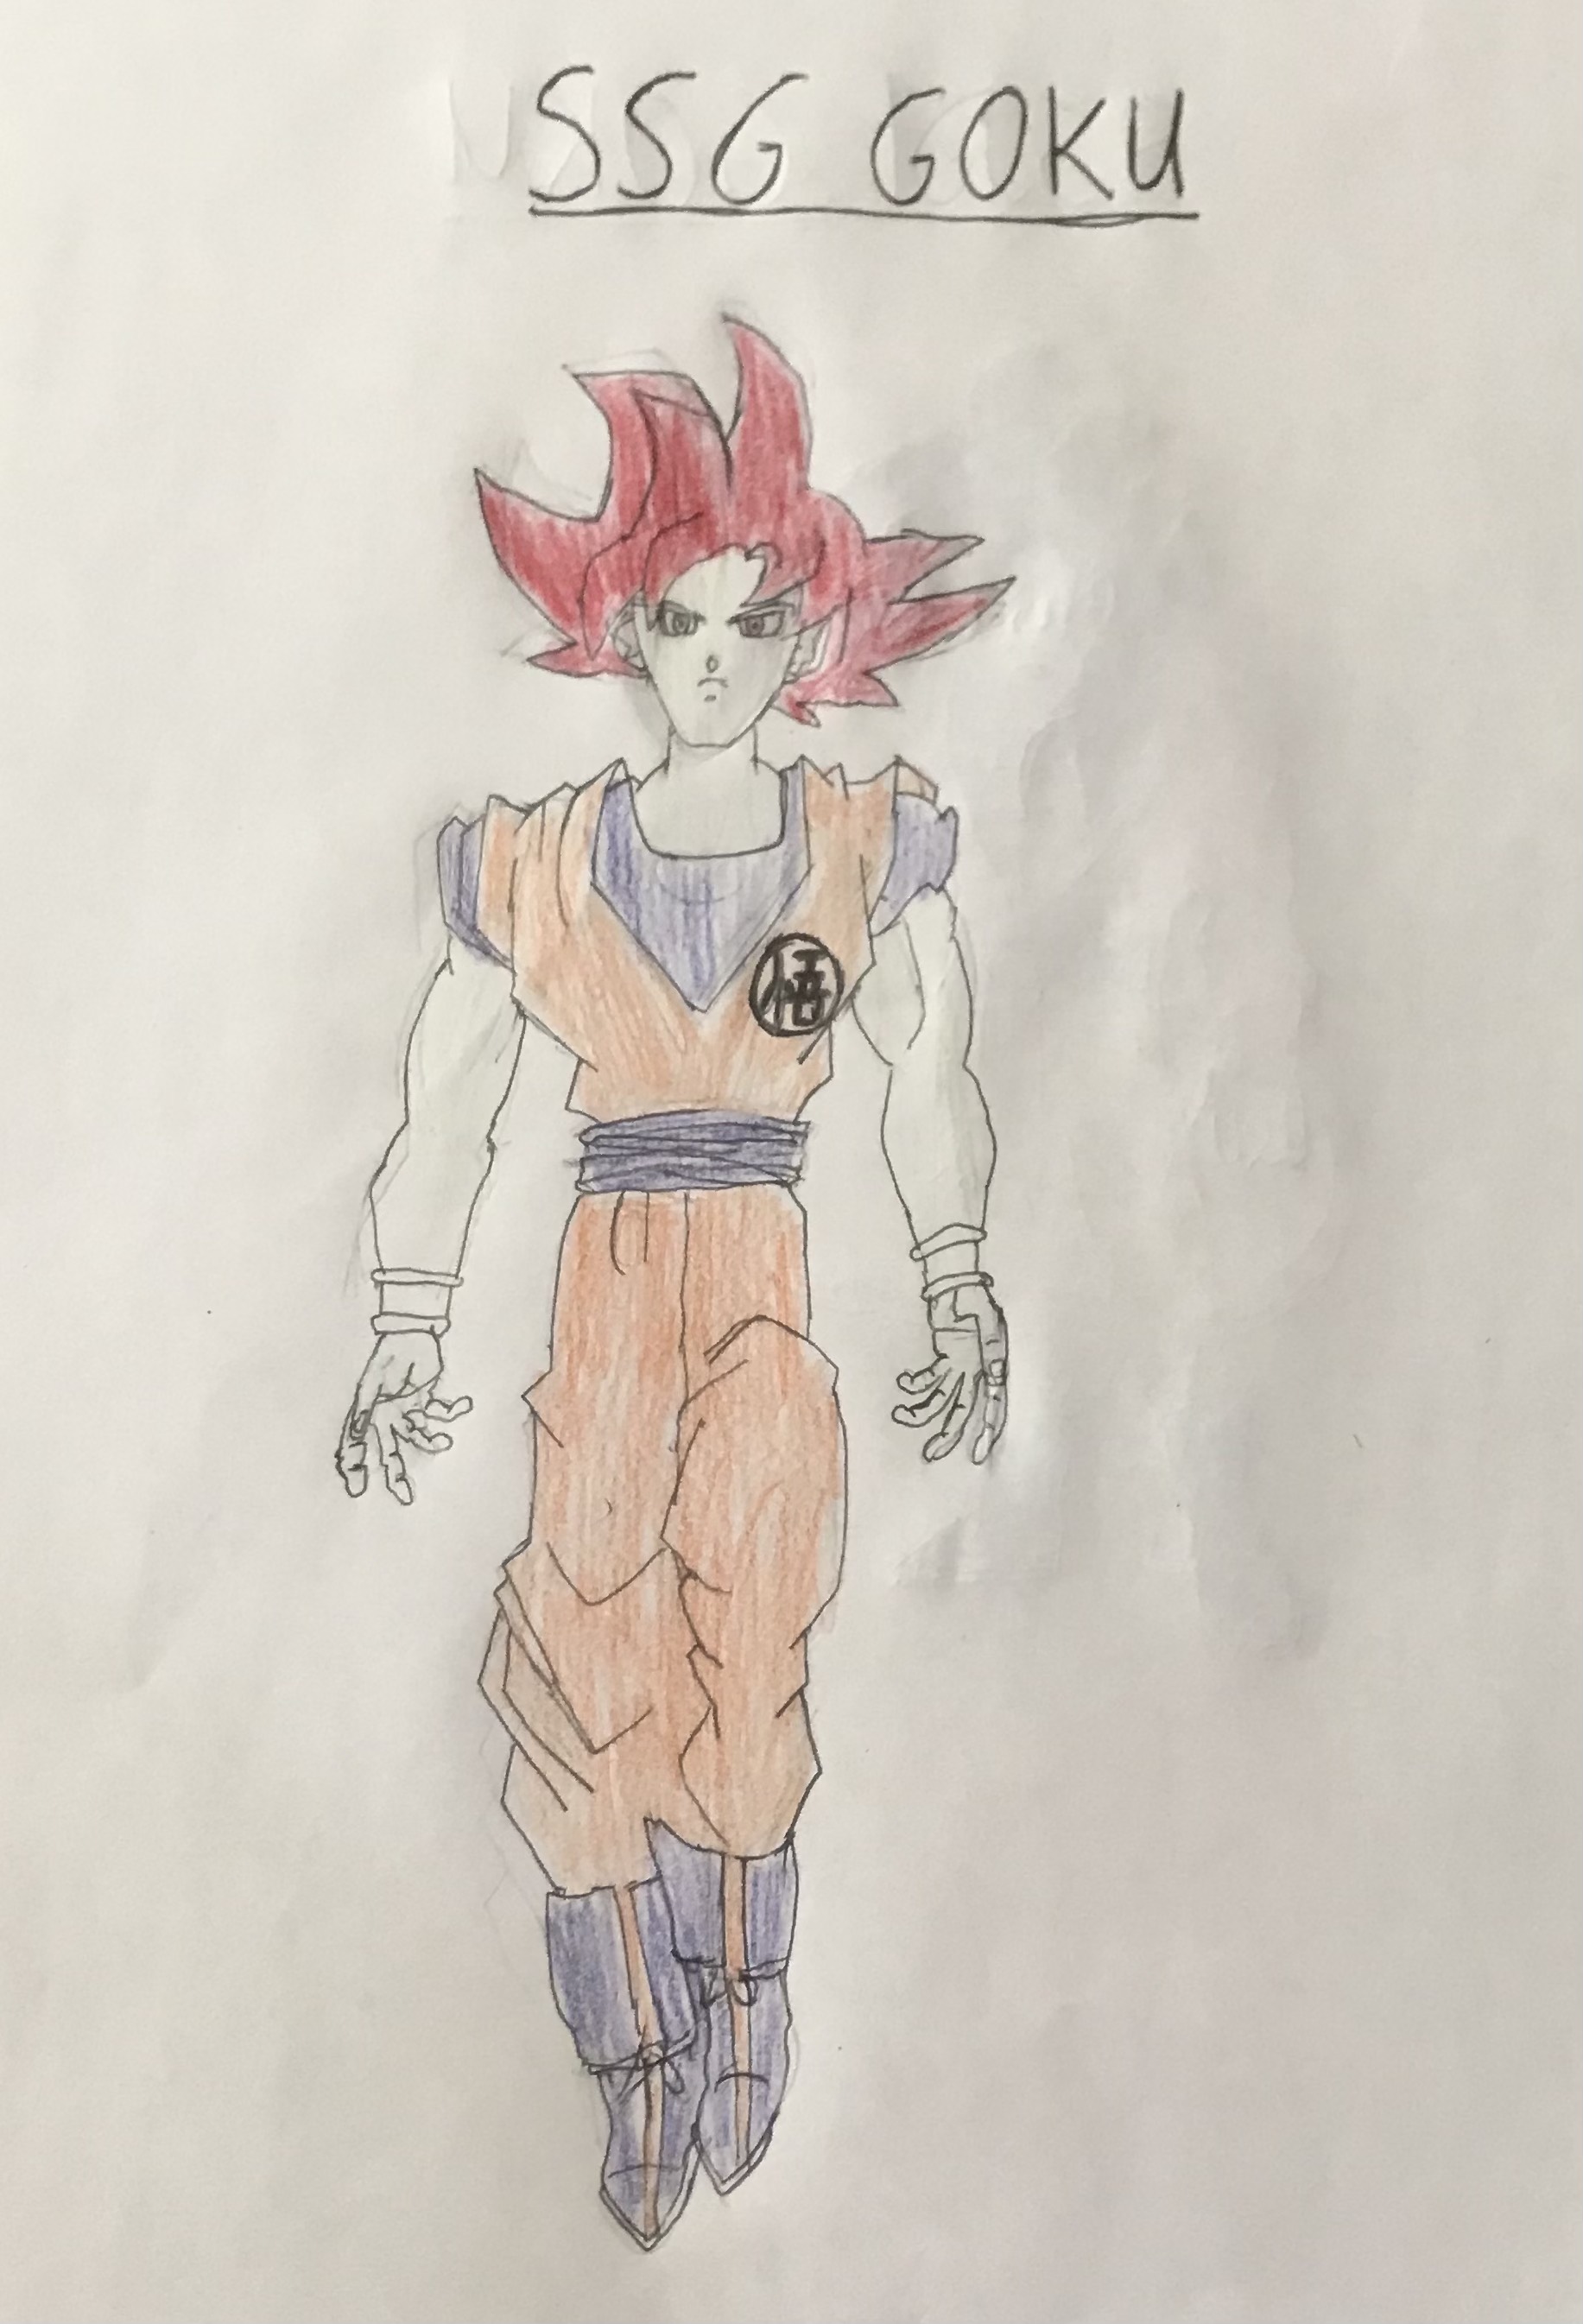 Drawing Goku Super Saiyan god 